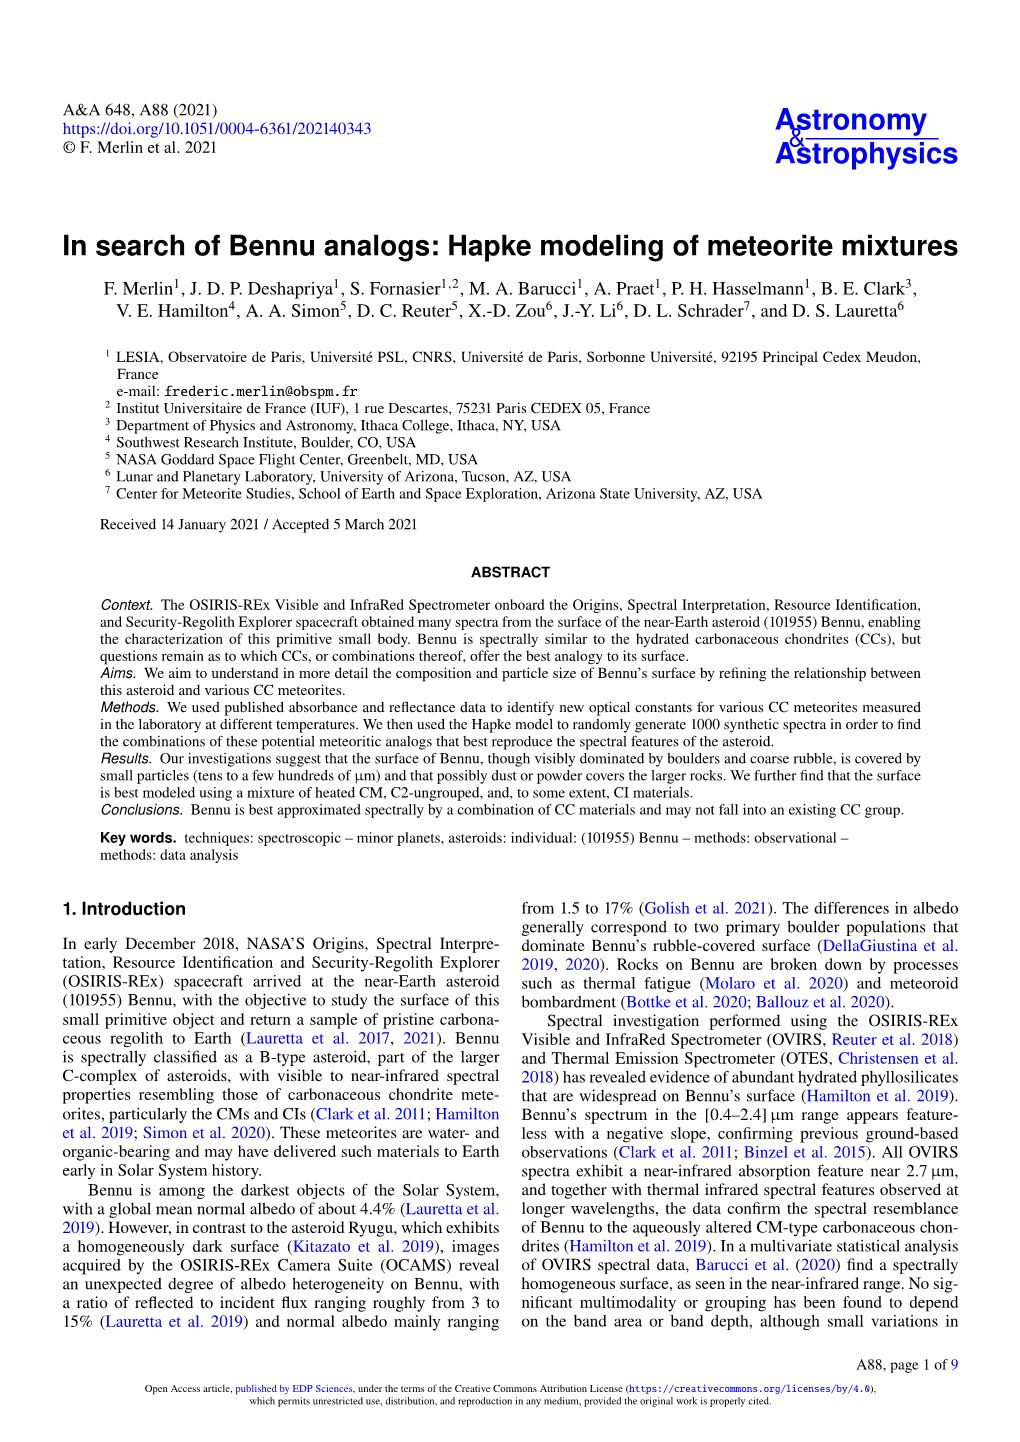 In Search of Bennu Analogs: Hapke Modeling of Meteorite Mixtures F